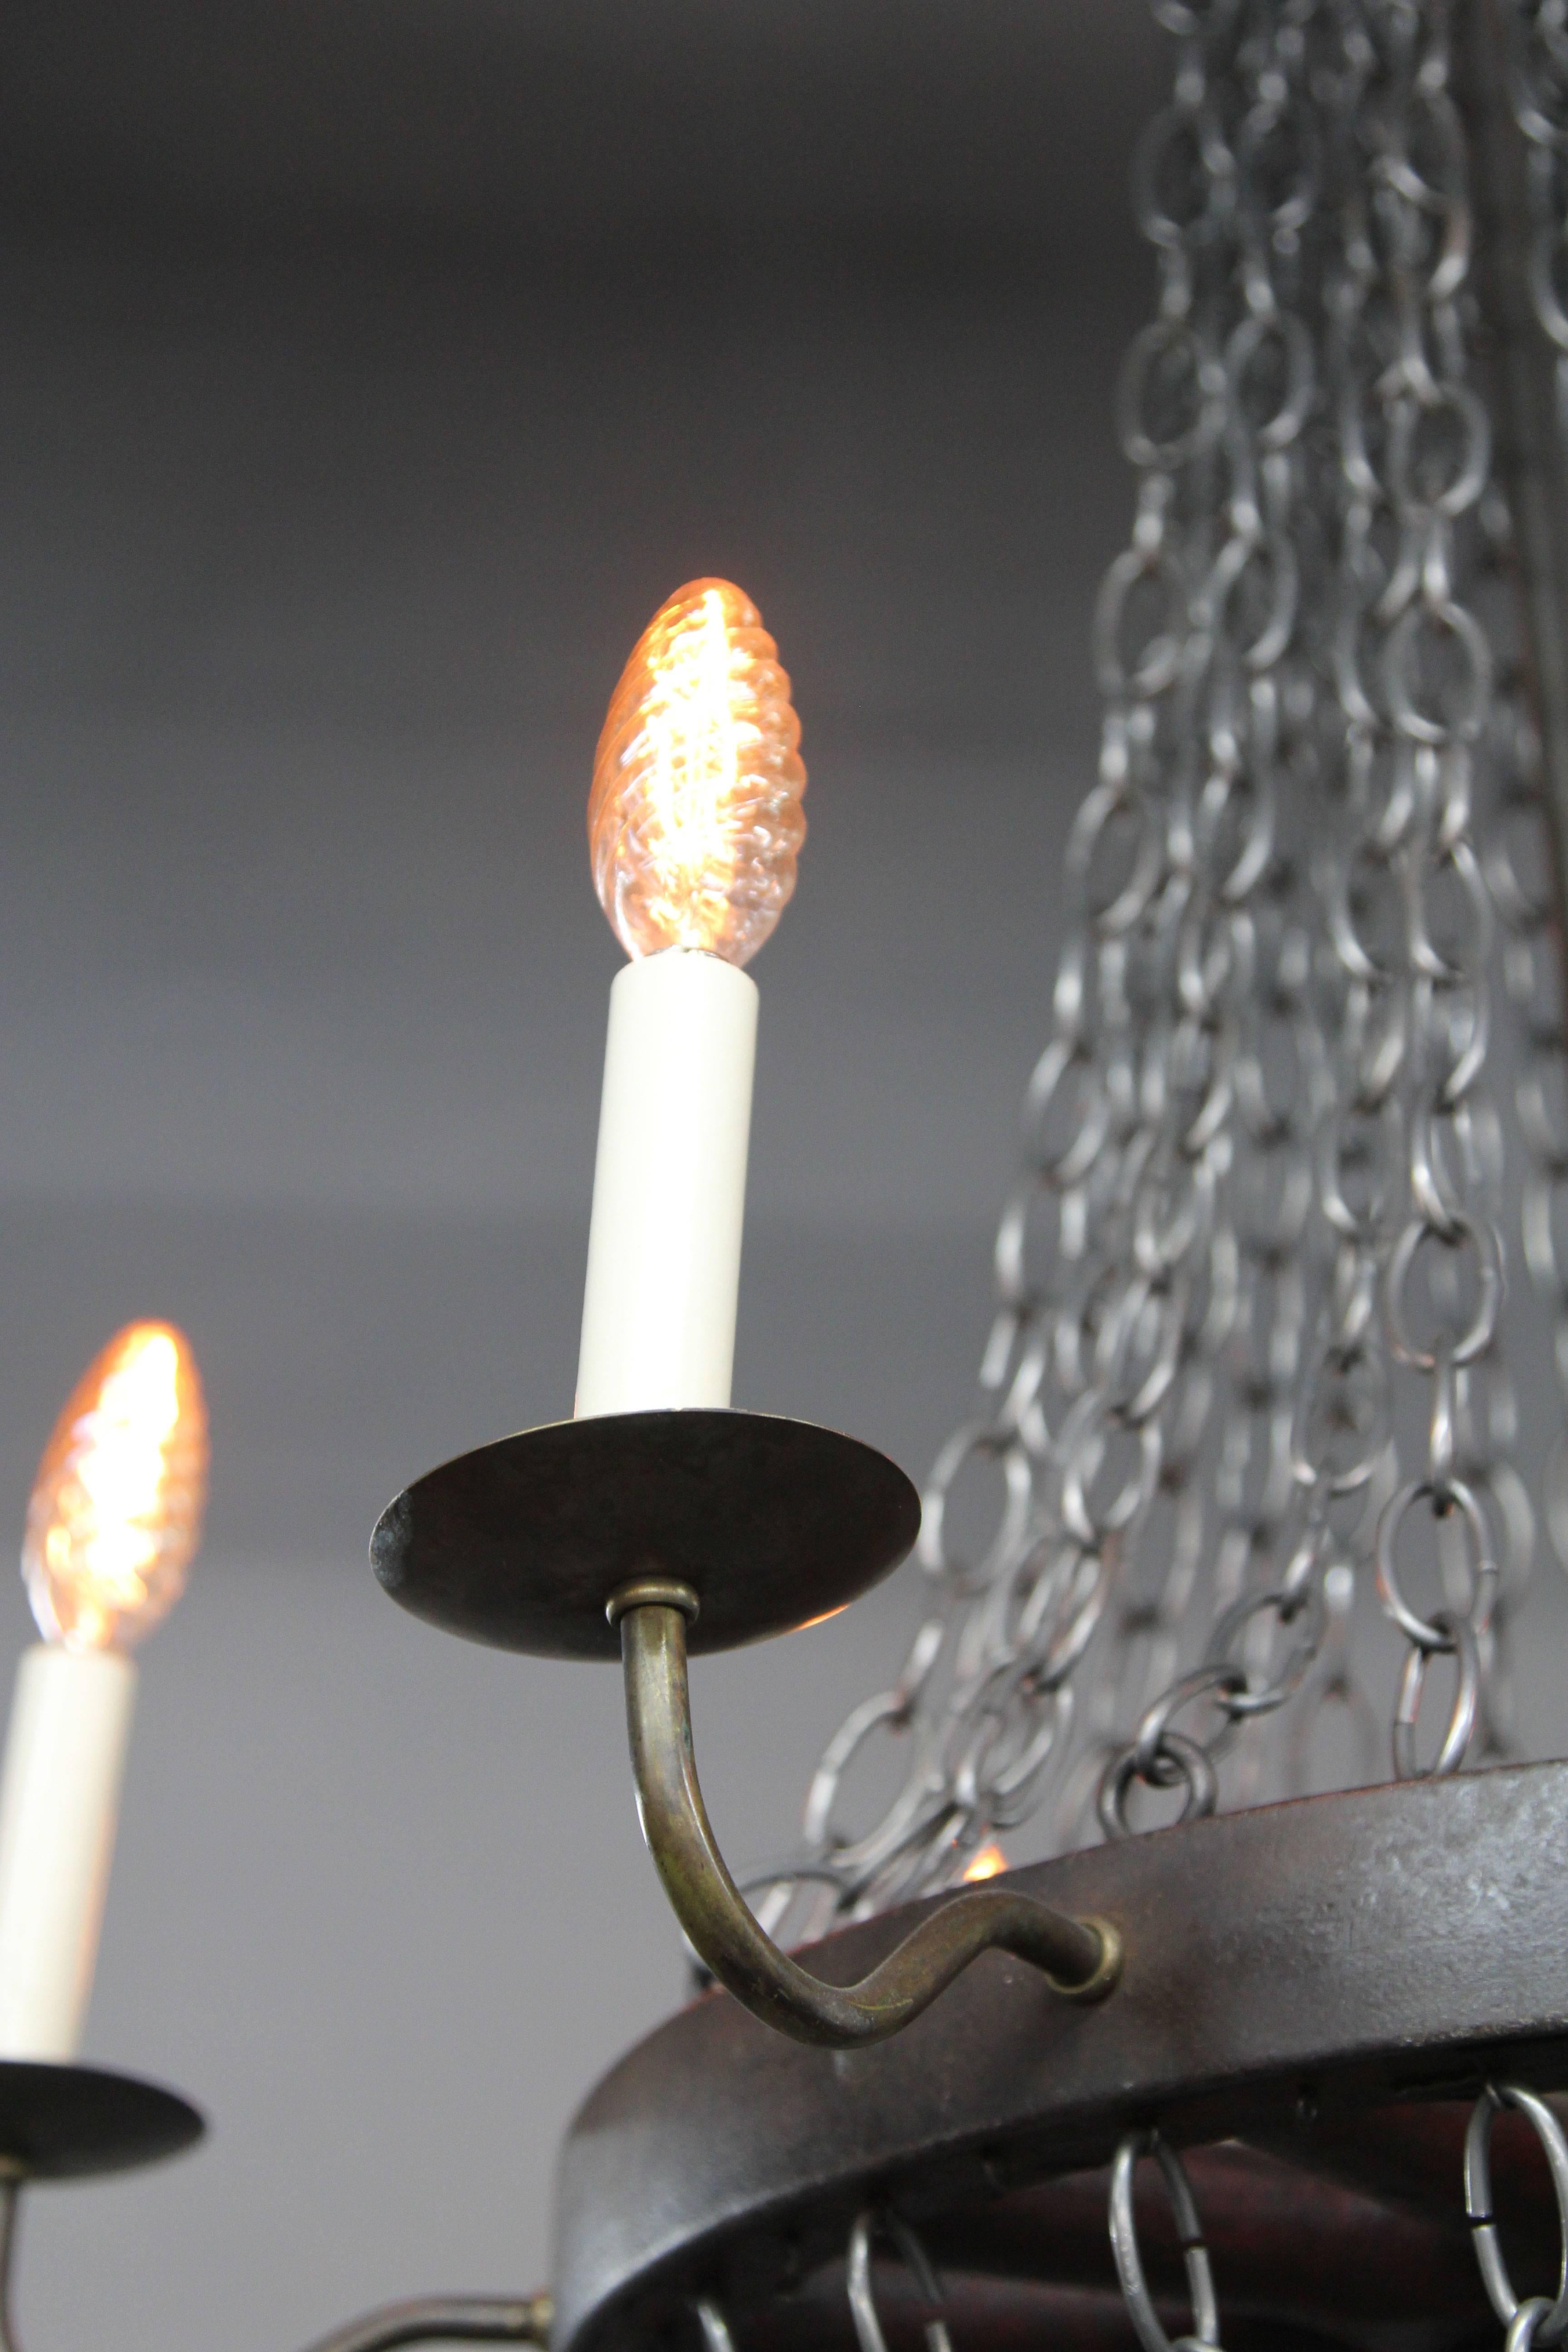 glass chain link chandelier